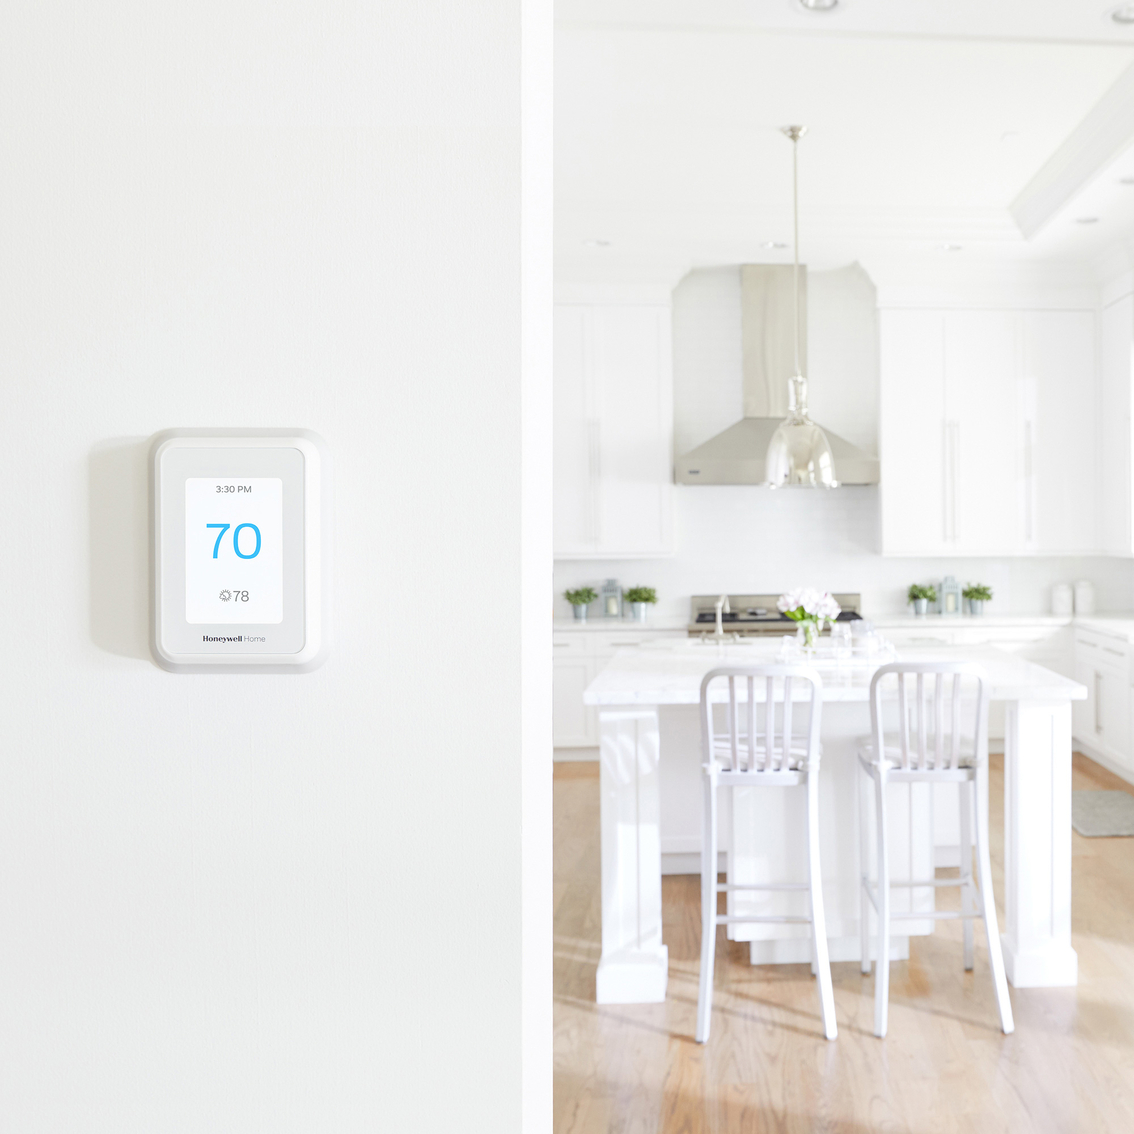 Honeywell T9 Smart Thermostat - Image 3 of 8